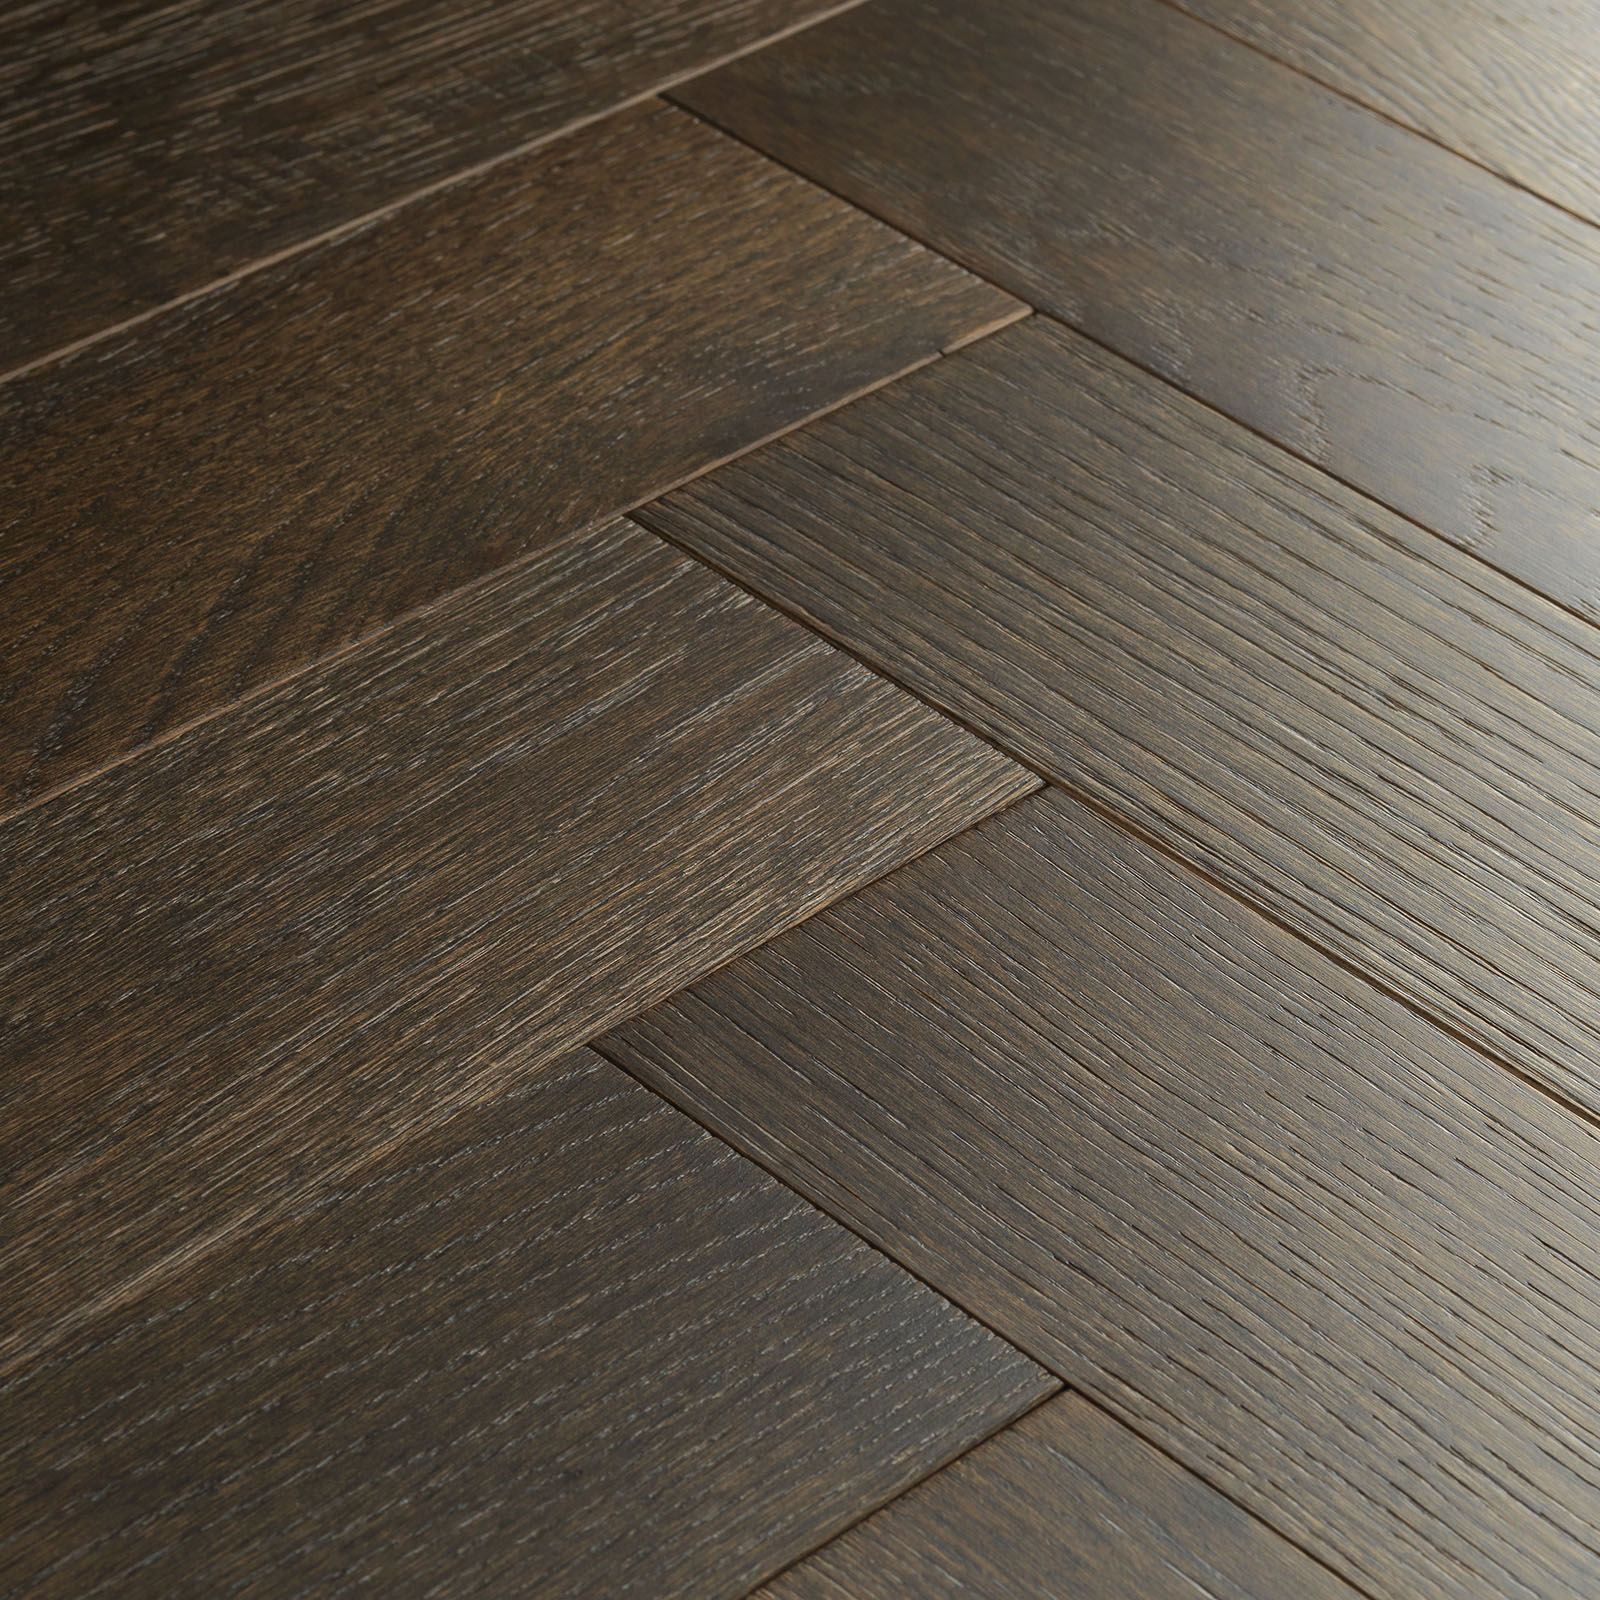 Engineered herringbone flooring Goodrich espresso oak.